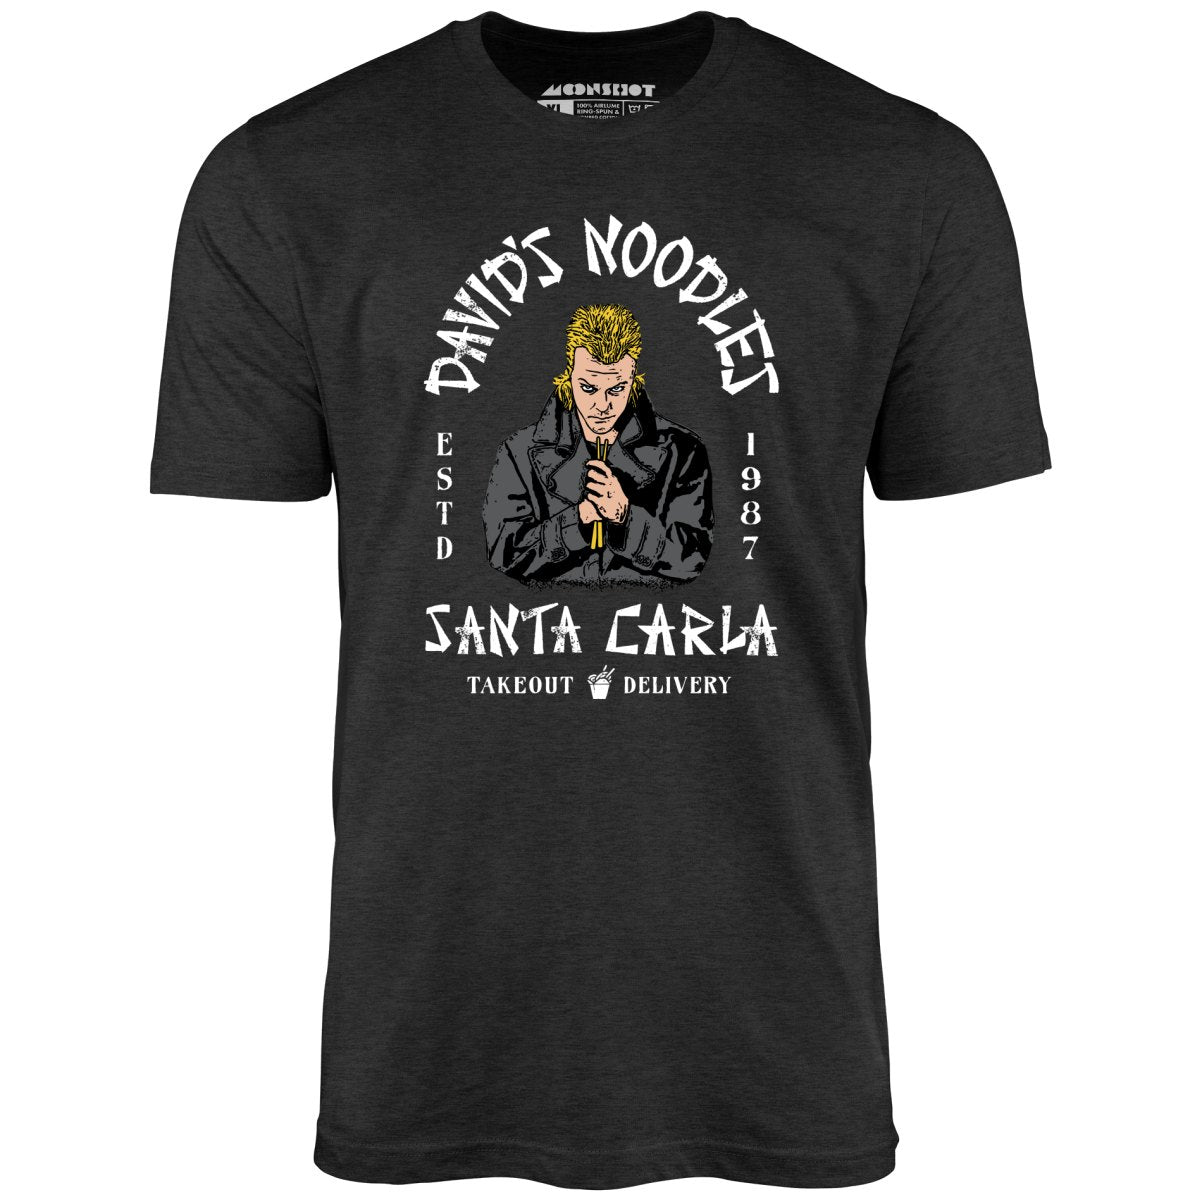 David's Noodles - Takeout & Delivery - Unisex T-Shirt